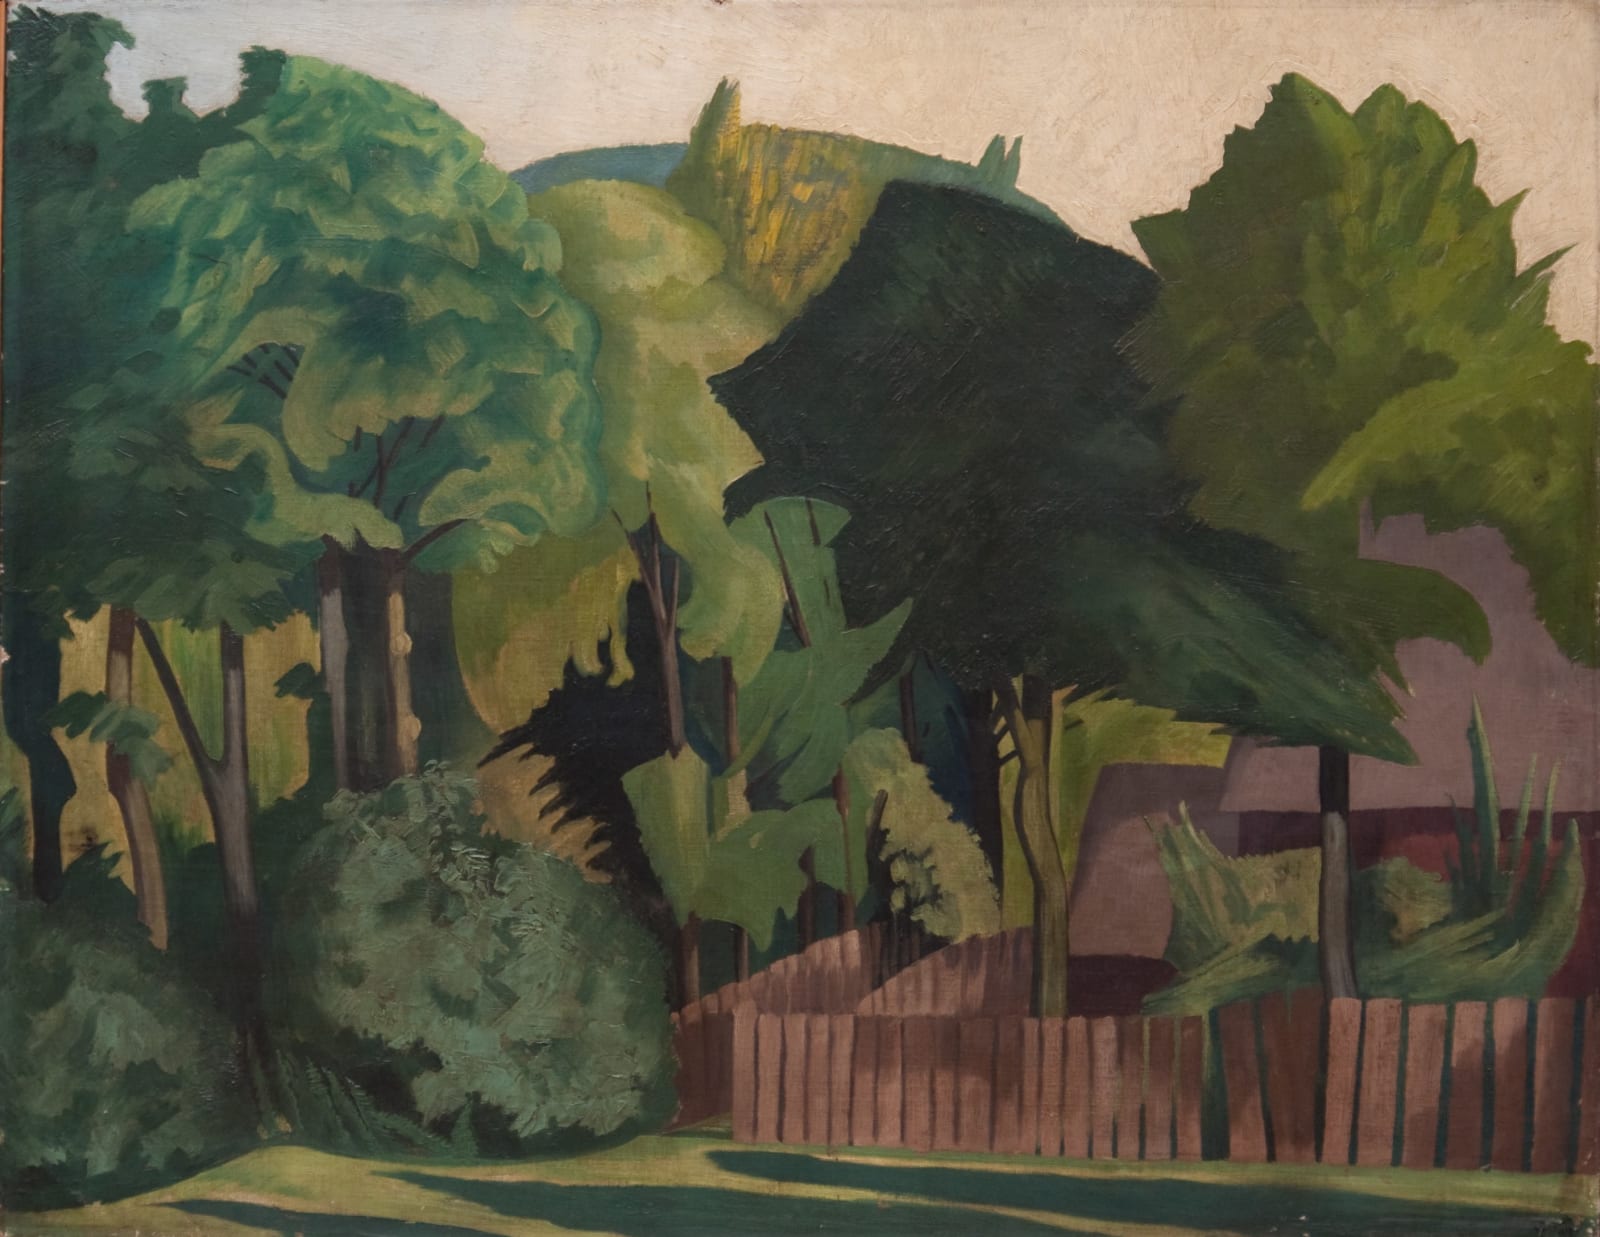 JOHN NASH, A Group of Trees, 1919